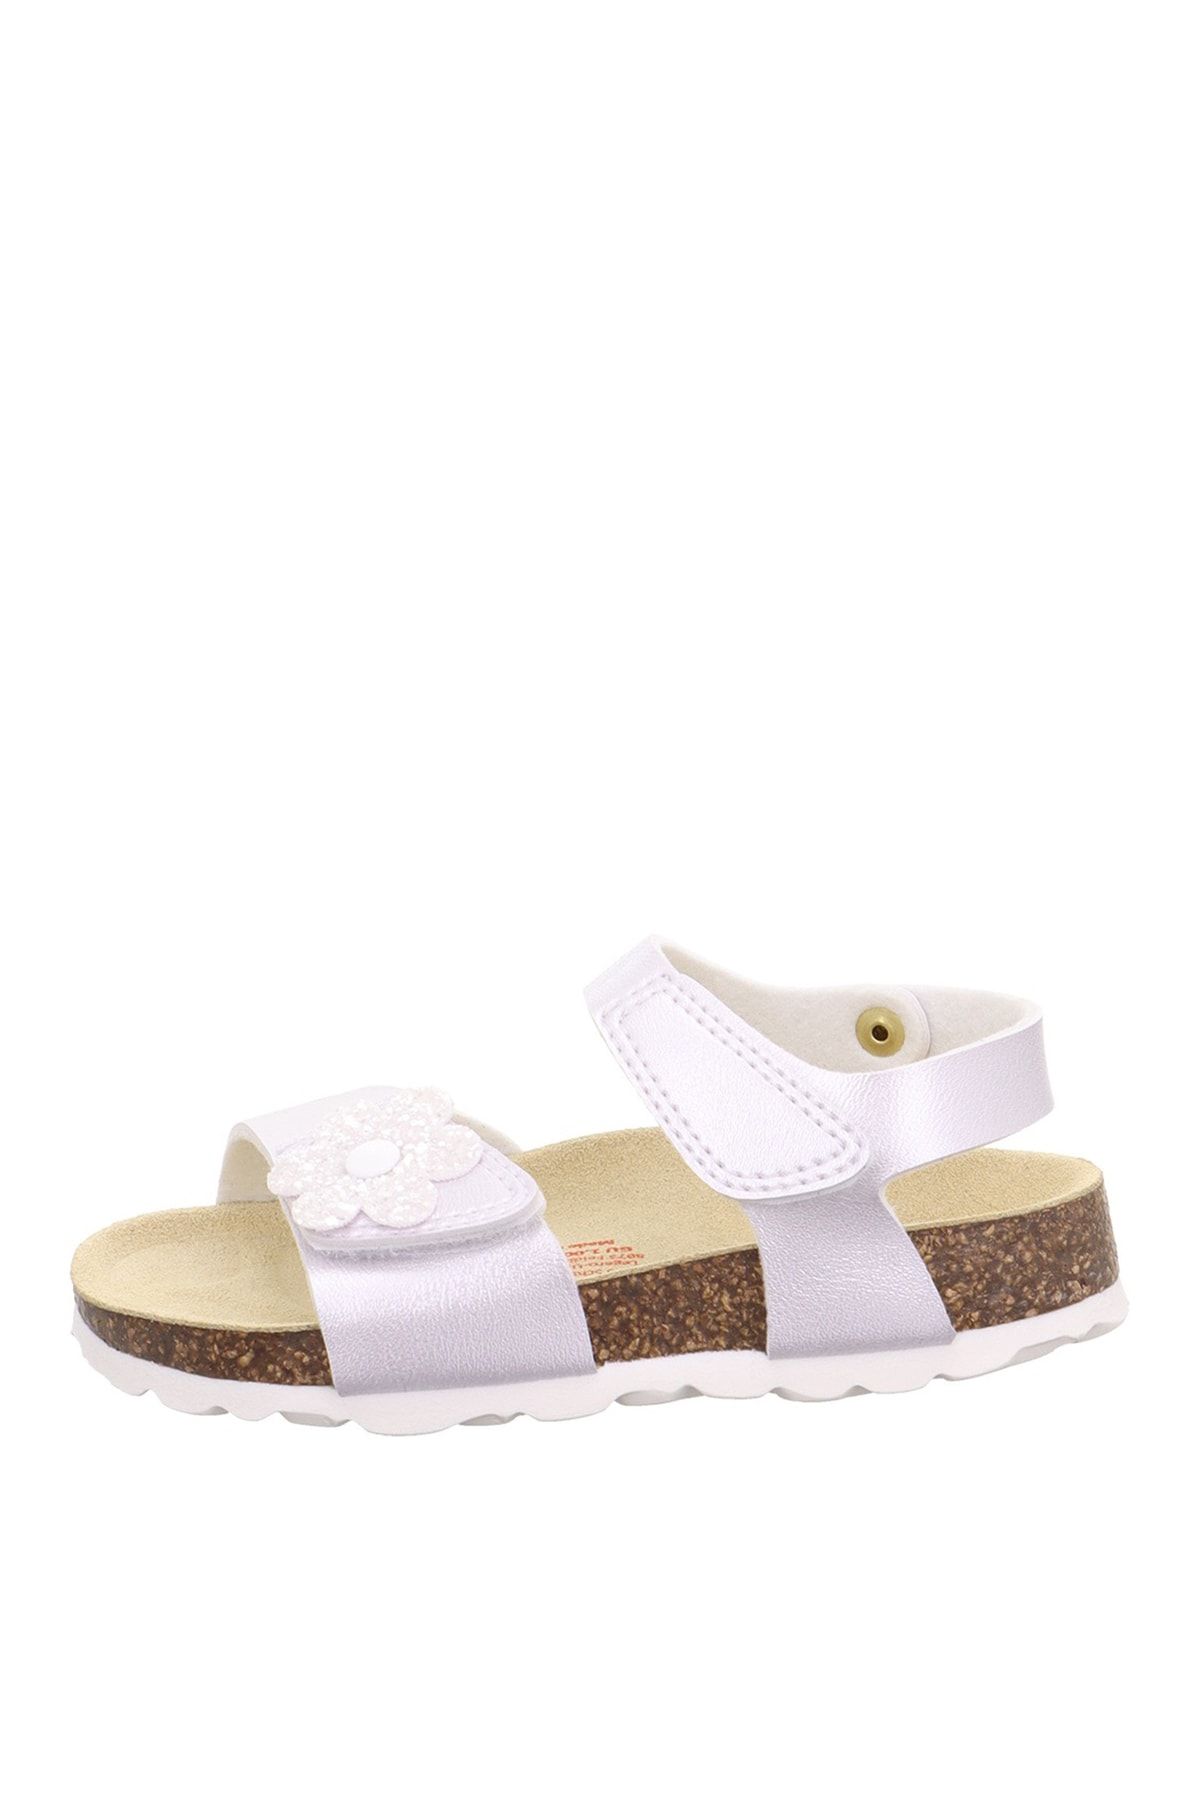 Superfit Beyaz Bebek Sandalet Bıos 1-000118-1010-1